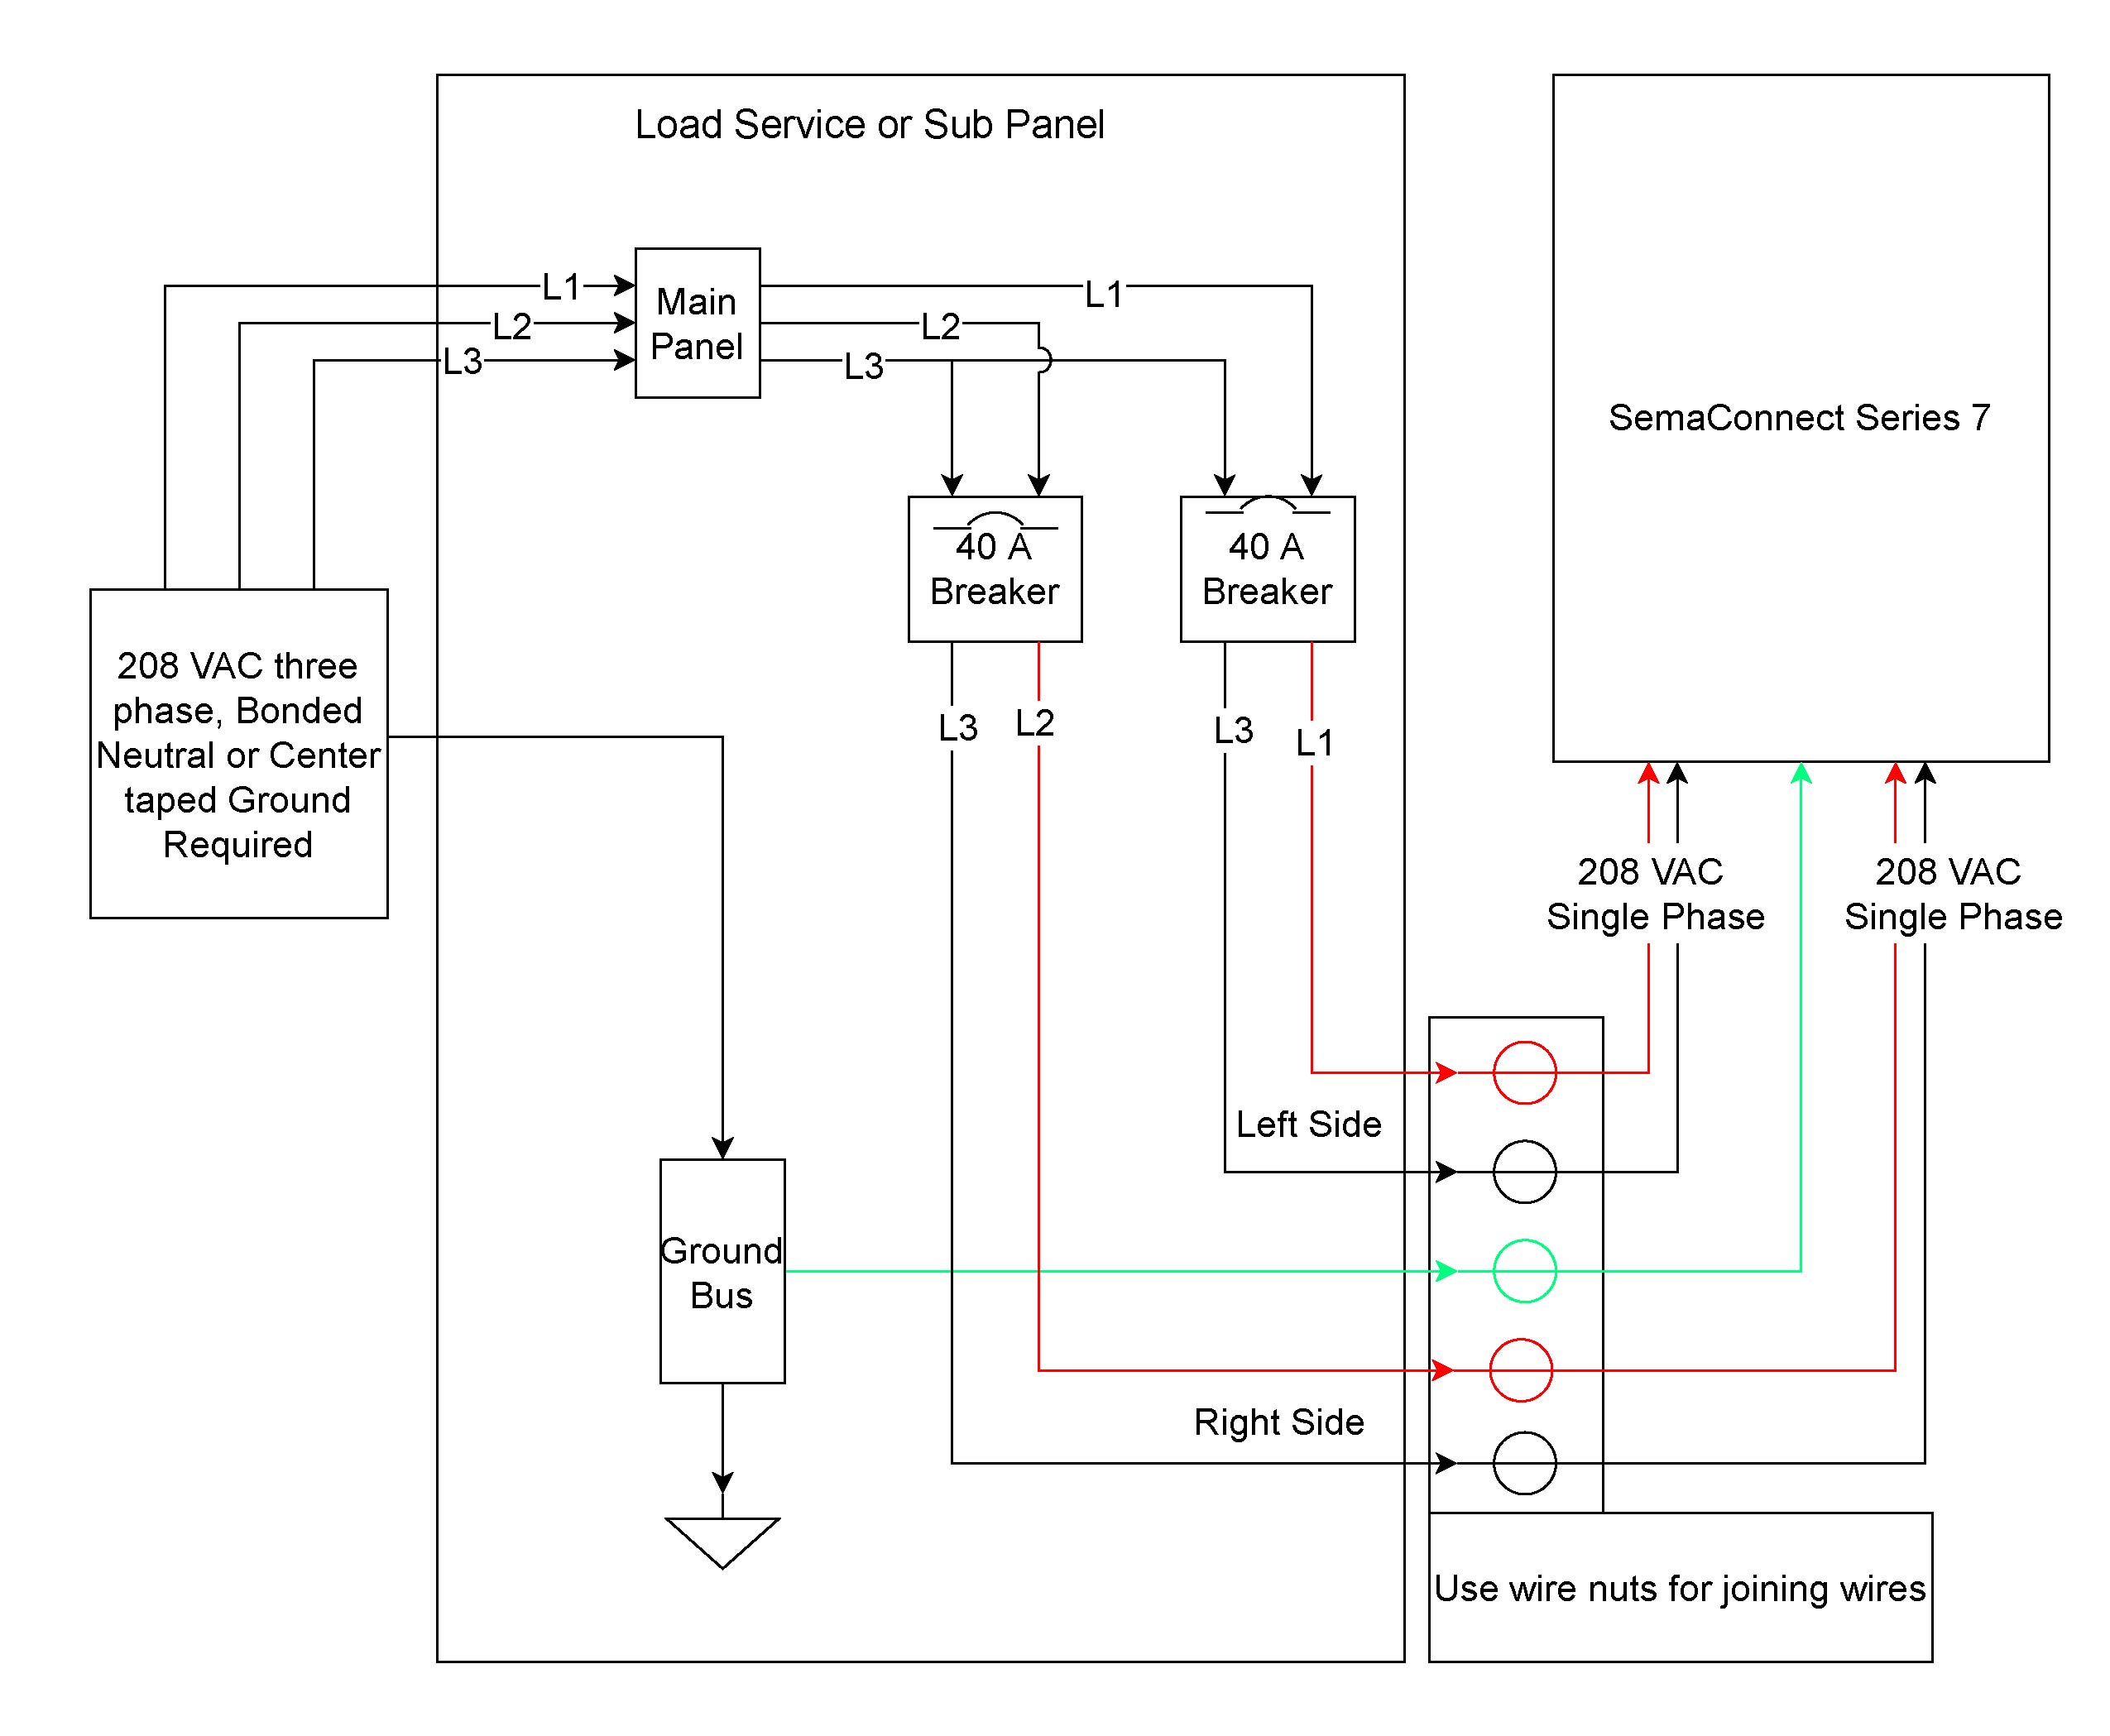 4s5p bms wiring diagram